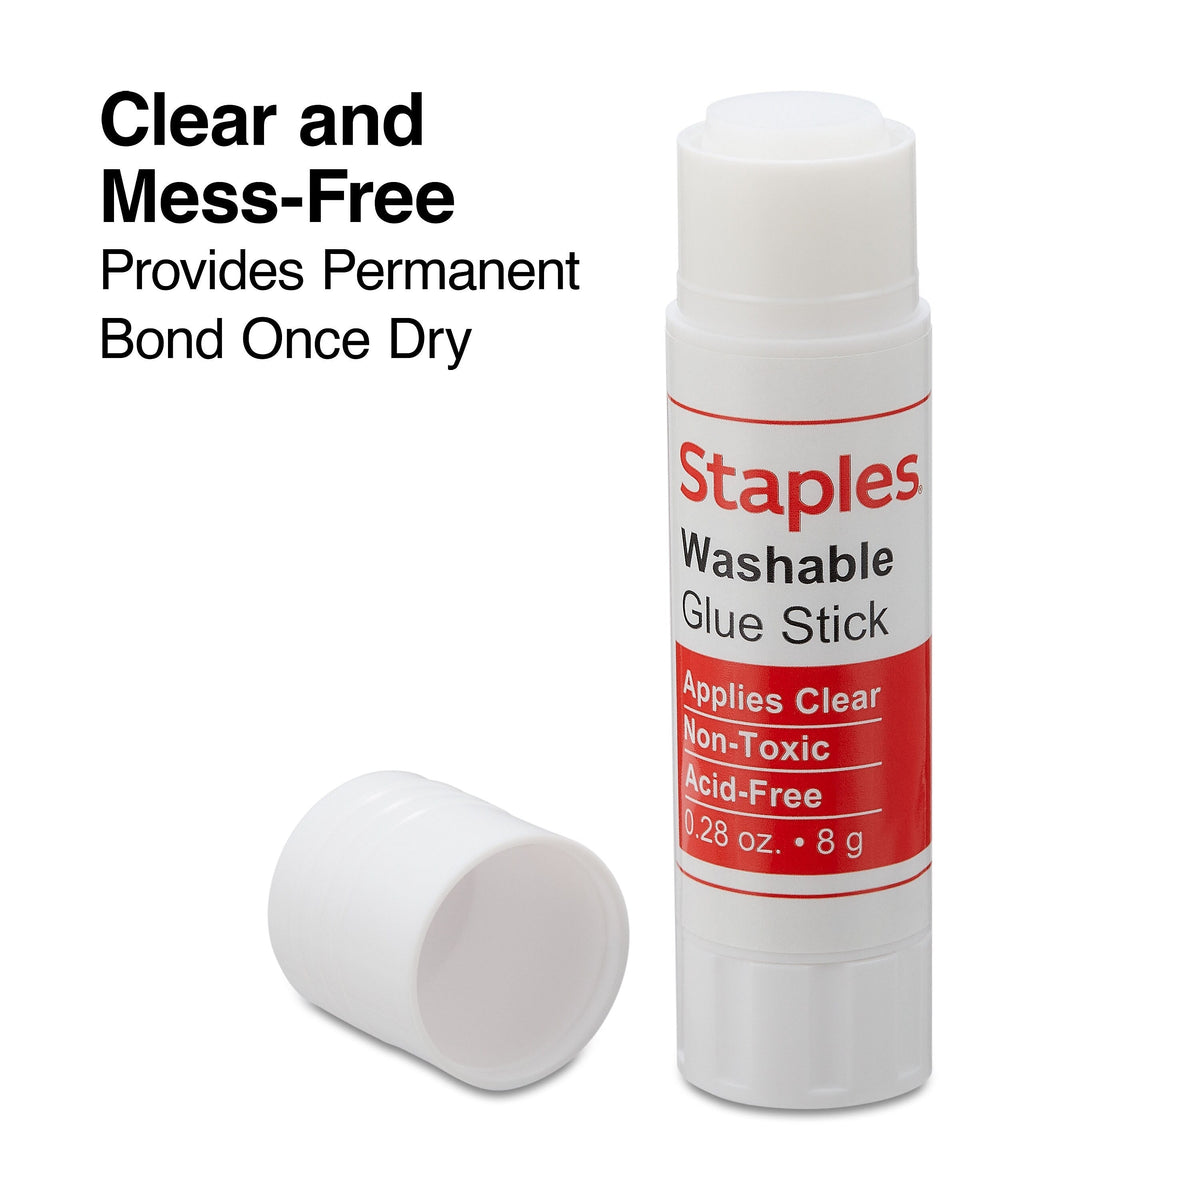 Staples Washable Glue Sticks, 0.28 oz., 36/Pack